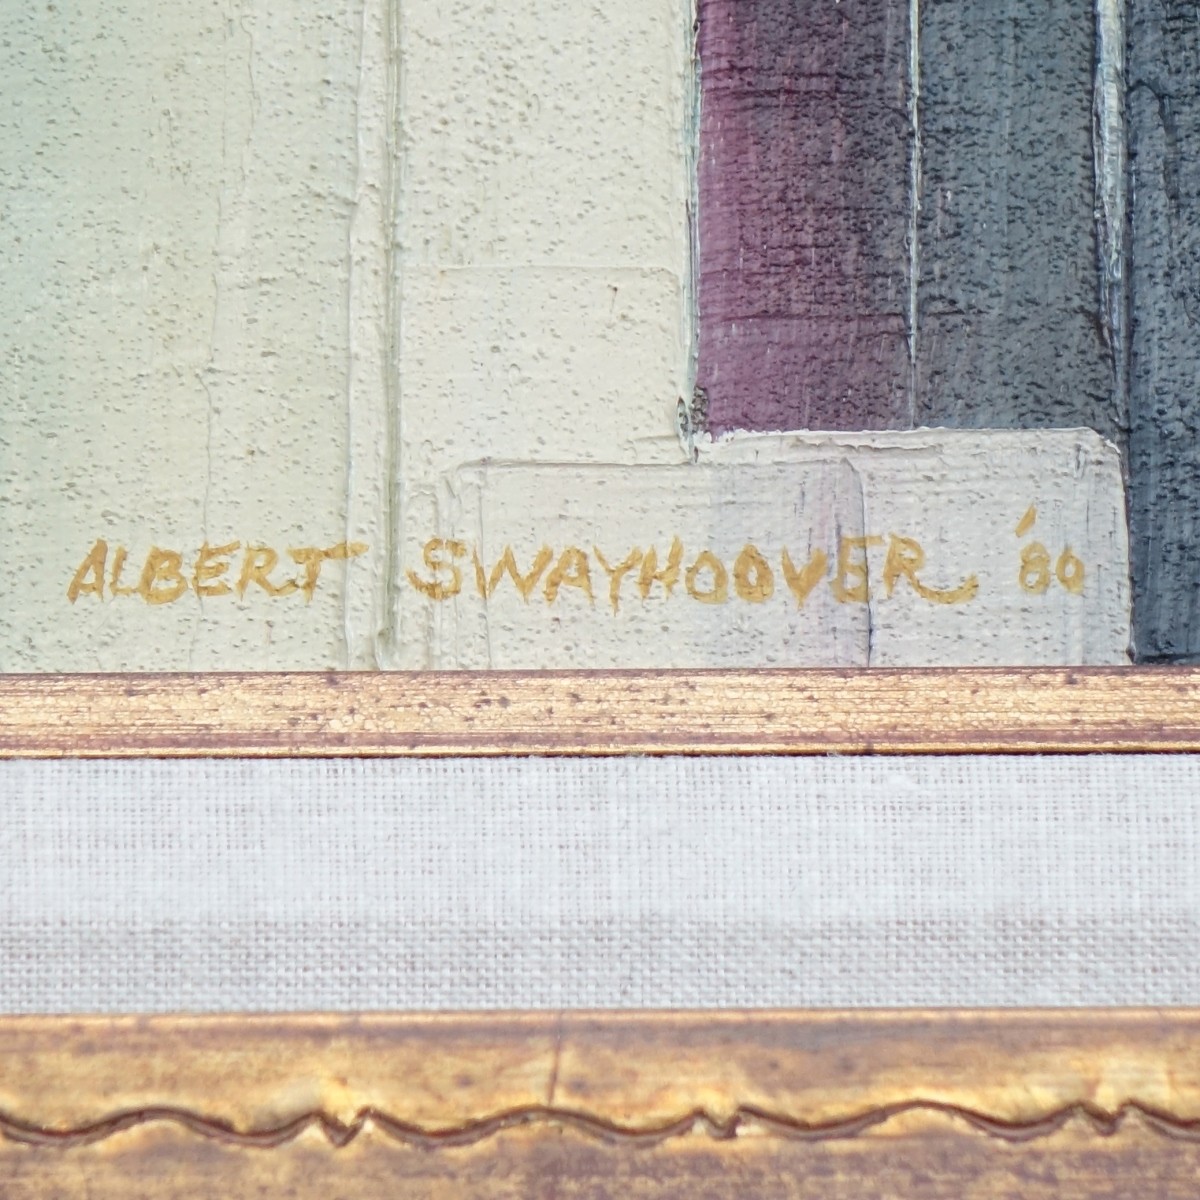 Albert Swayhoover, American (b. 1931)